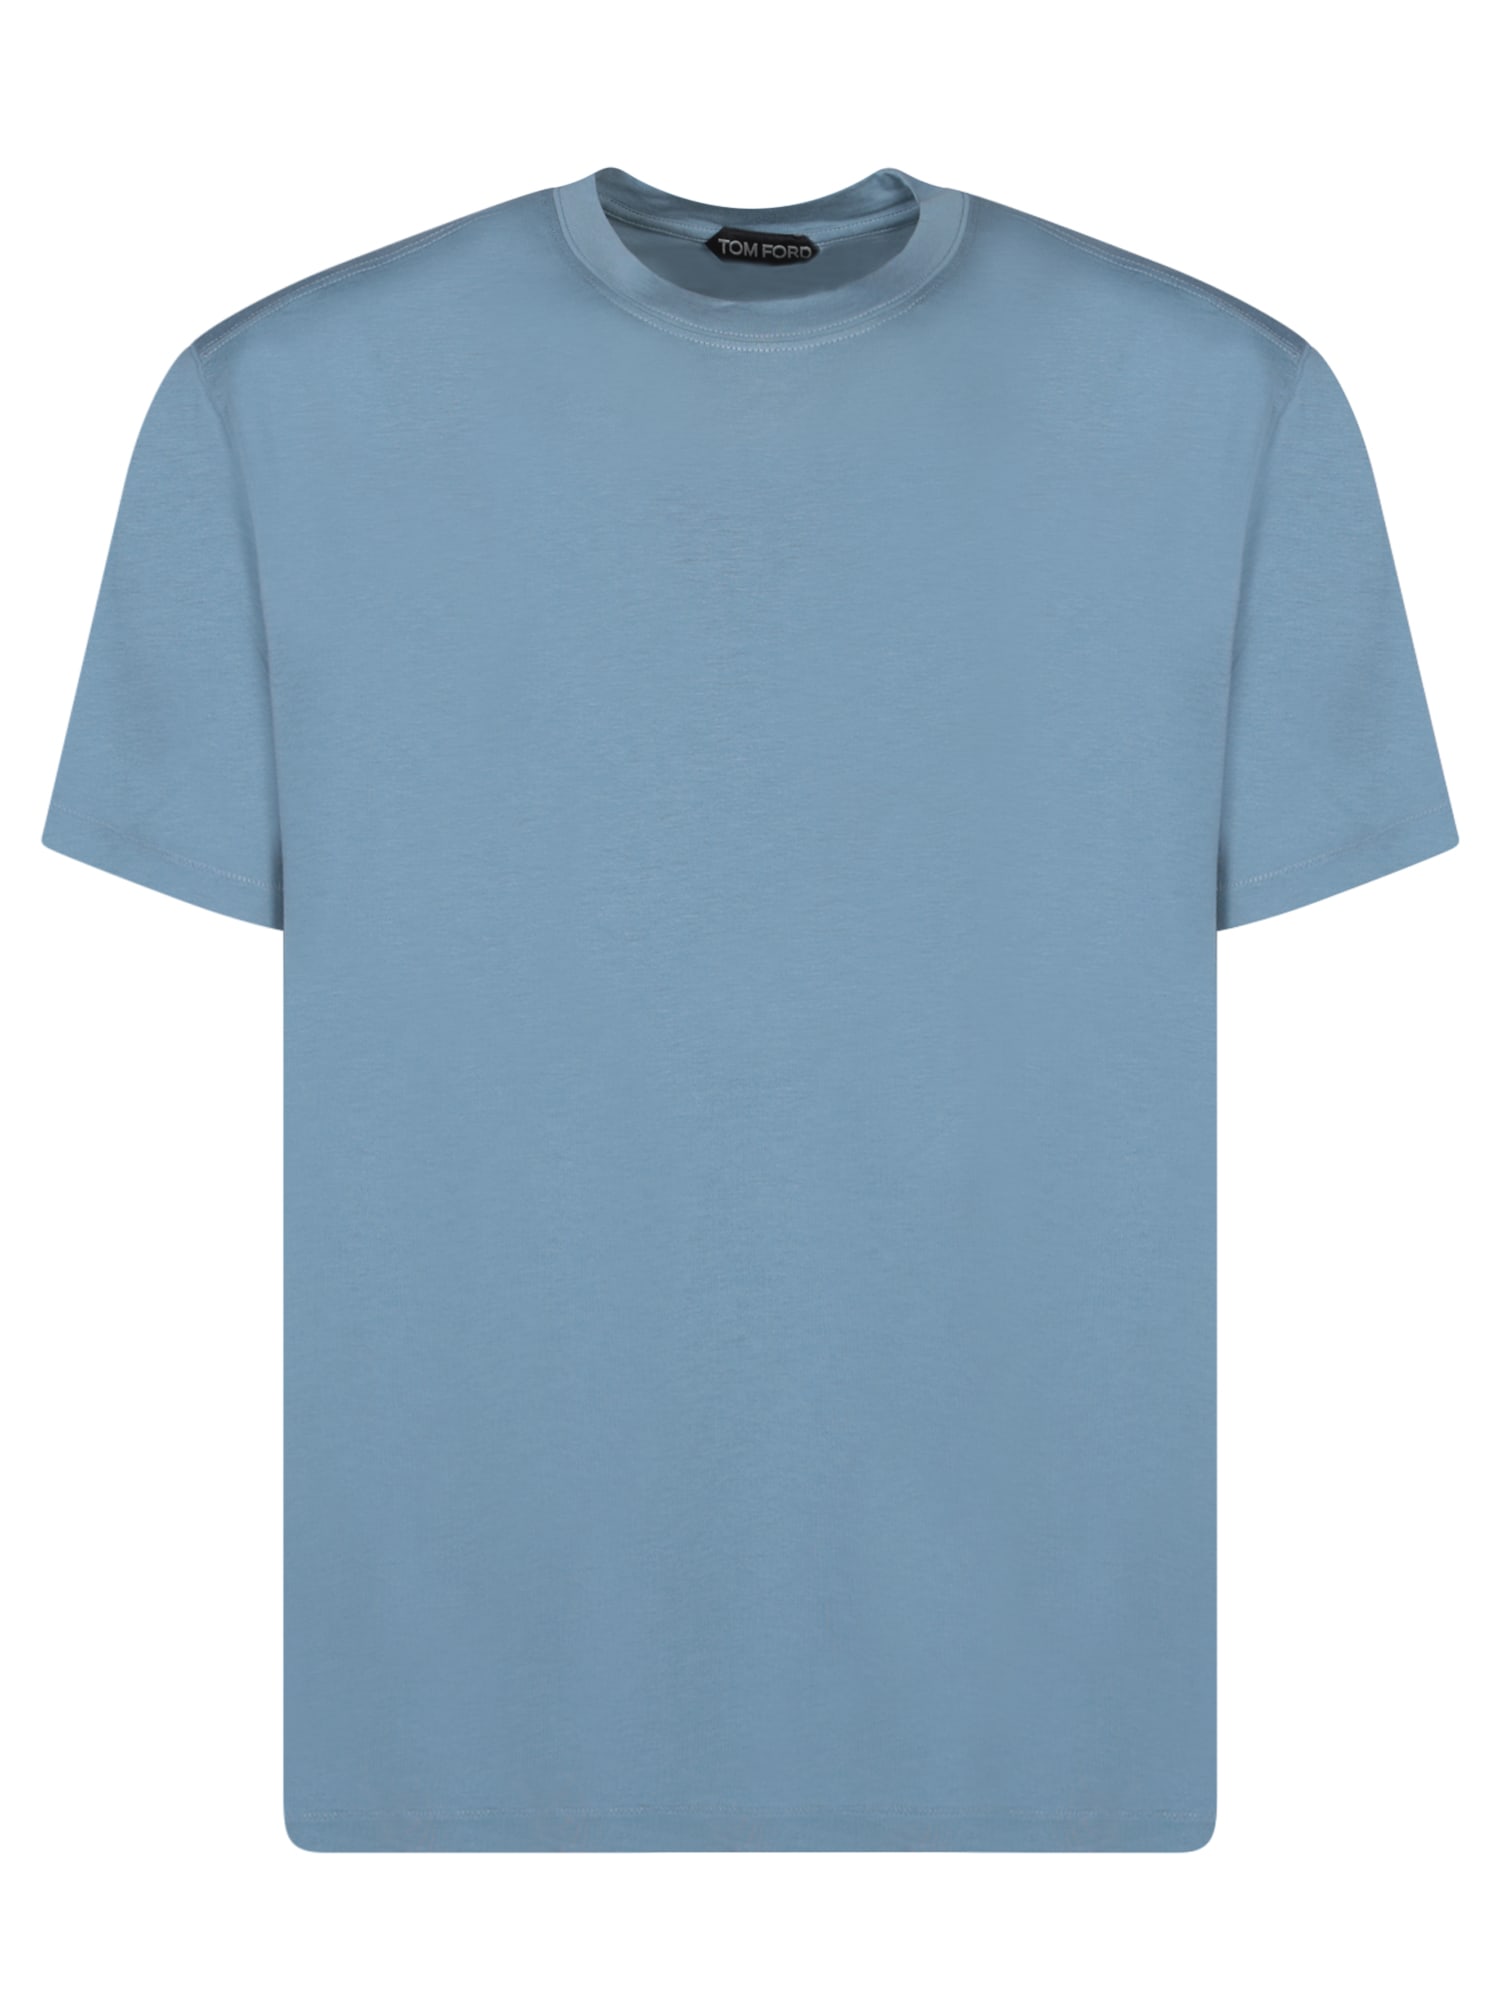 Shop Tom Ford Basic Light Blue T-shirt